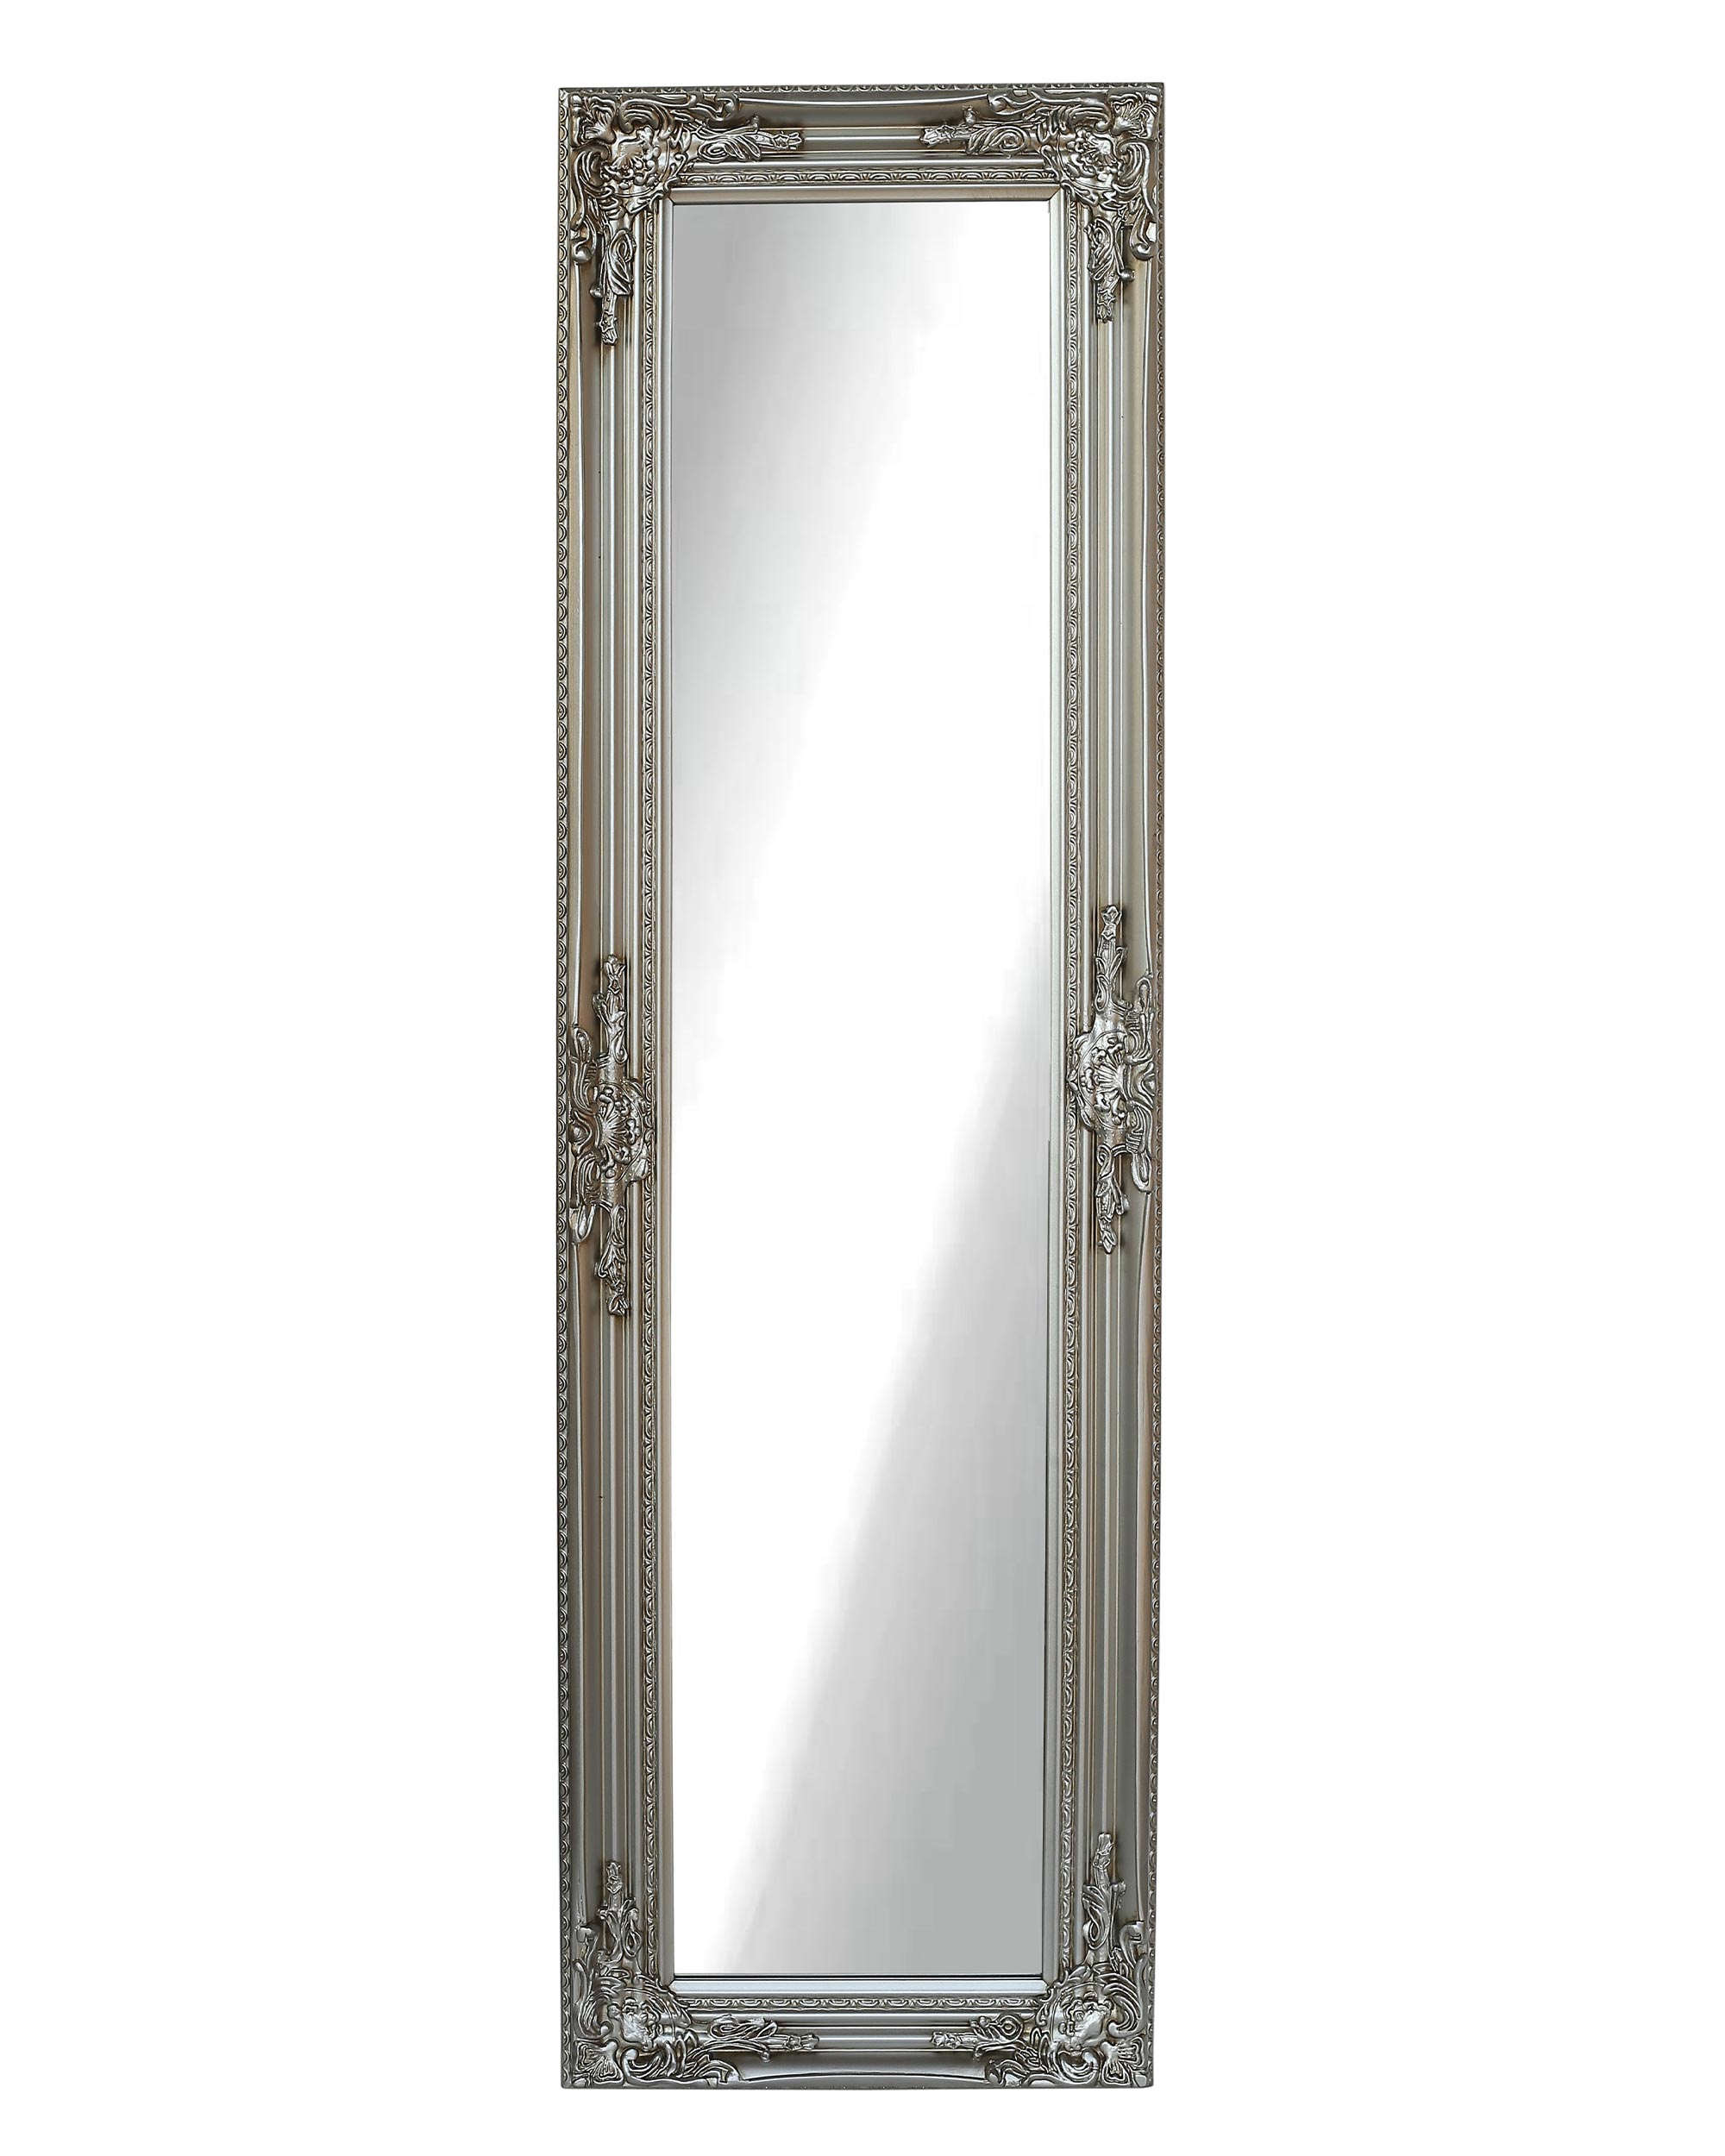 LC Home Wandspiegel Barock Spiegel silber ca. 130 x 40 cm Antik-Stil Flurspiegel